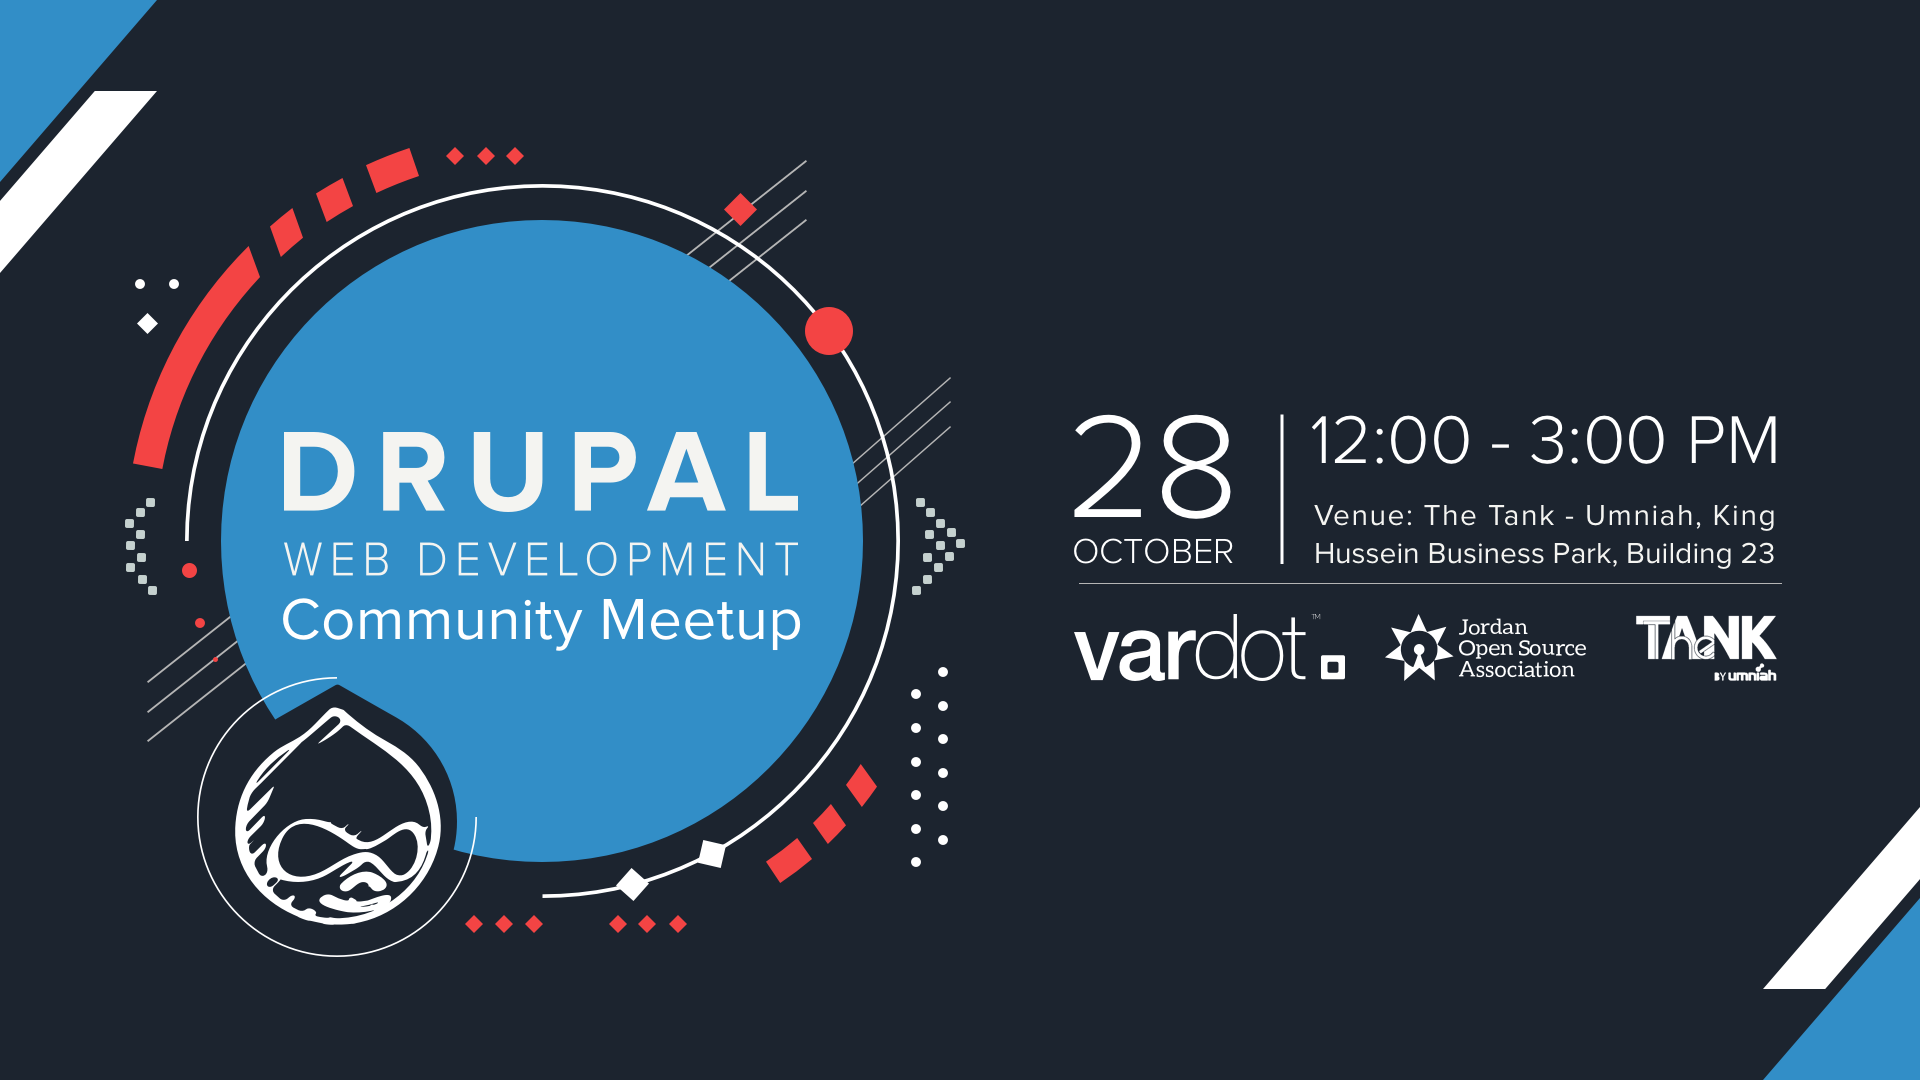 Drupal Community Meetup (Web Development) - October 2017</p>
<p>